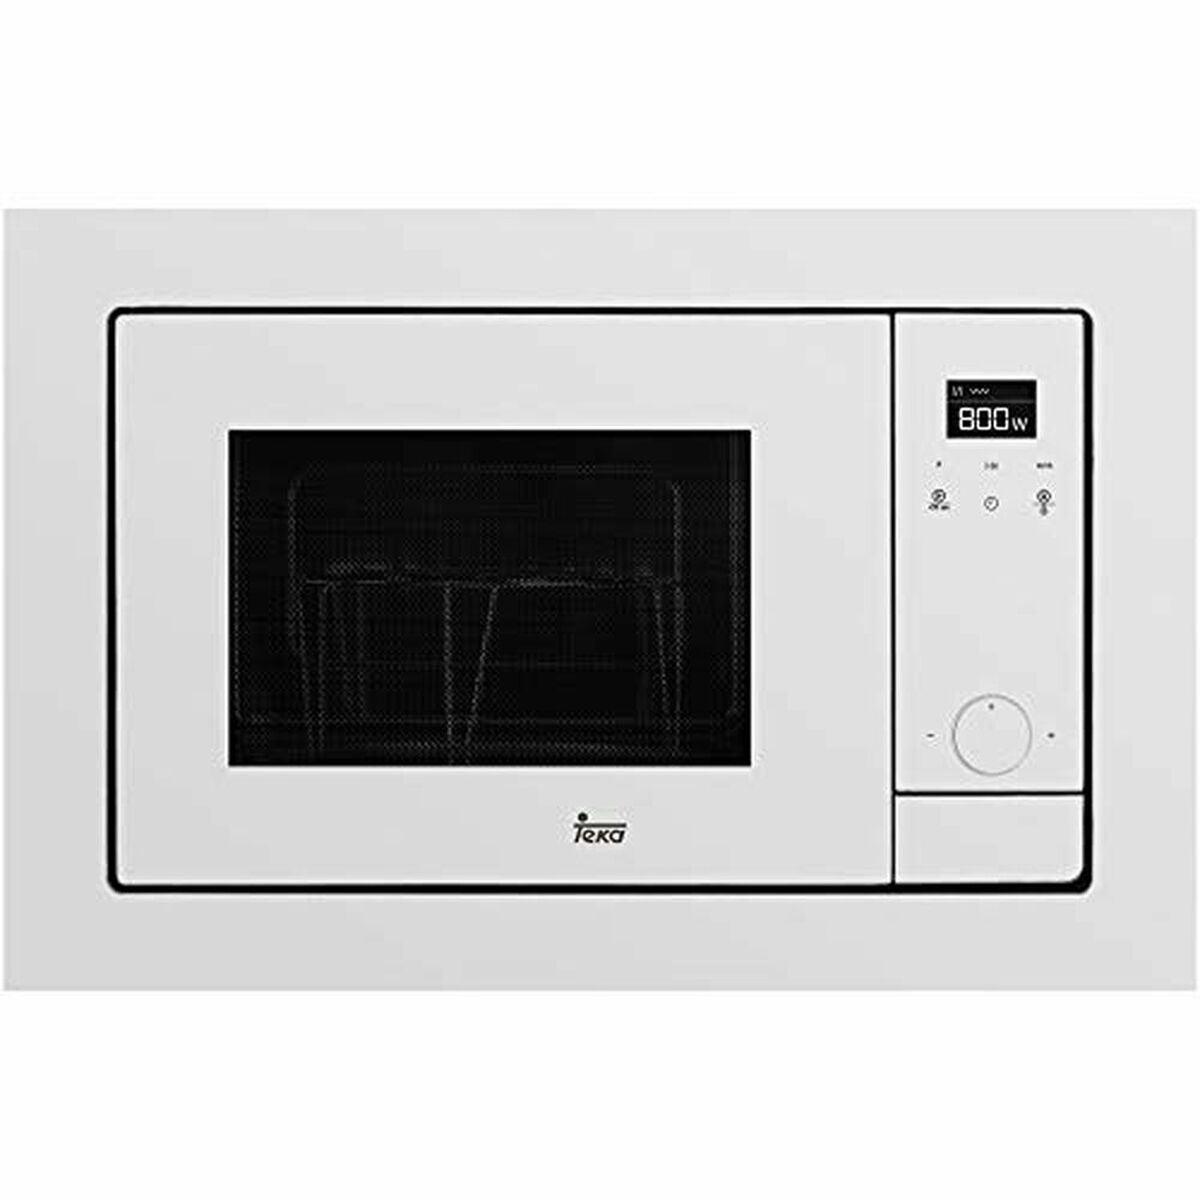 Microwave Teka 225400 20L 700 W 1000W (20 L) - Sterilamo